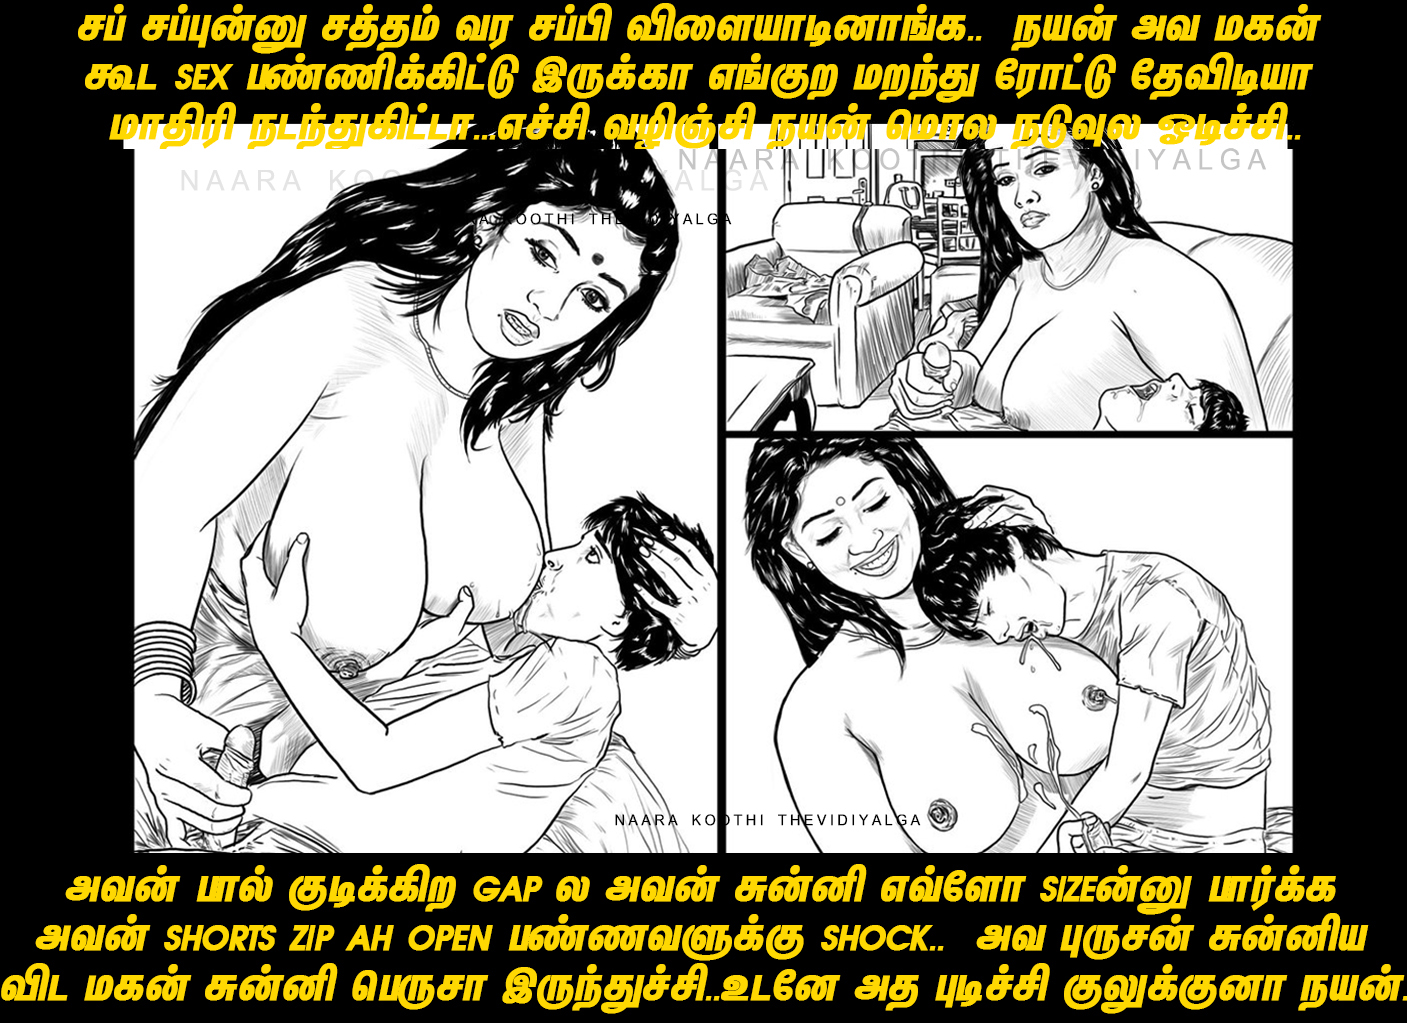 Porn stories in tamil